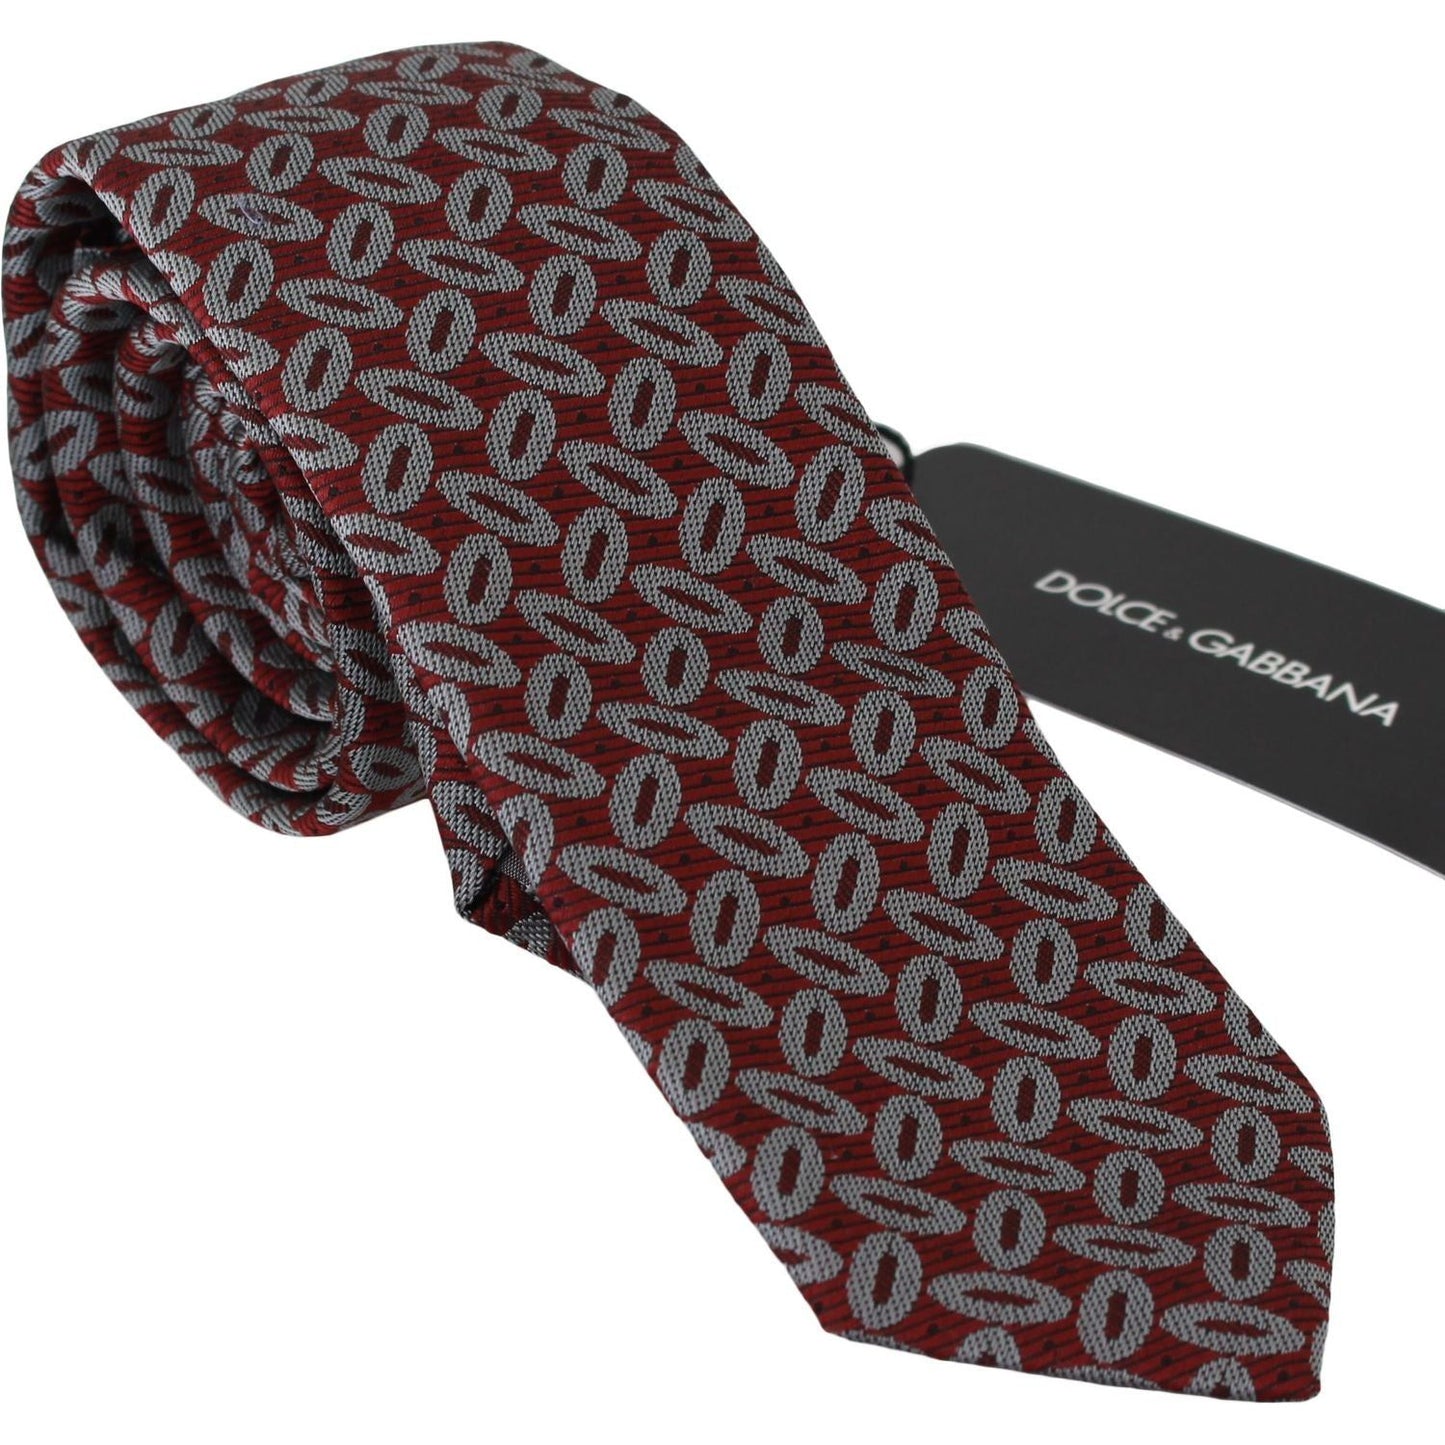 Dolce & Gabbana Elegant Red Printed Silk Neck Tie red-100-silk-printed-wide-necktie-men-tie Necktie IMG_1467-1f7328c2-31c.jpg